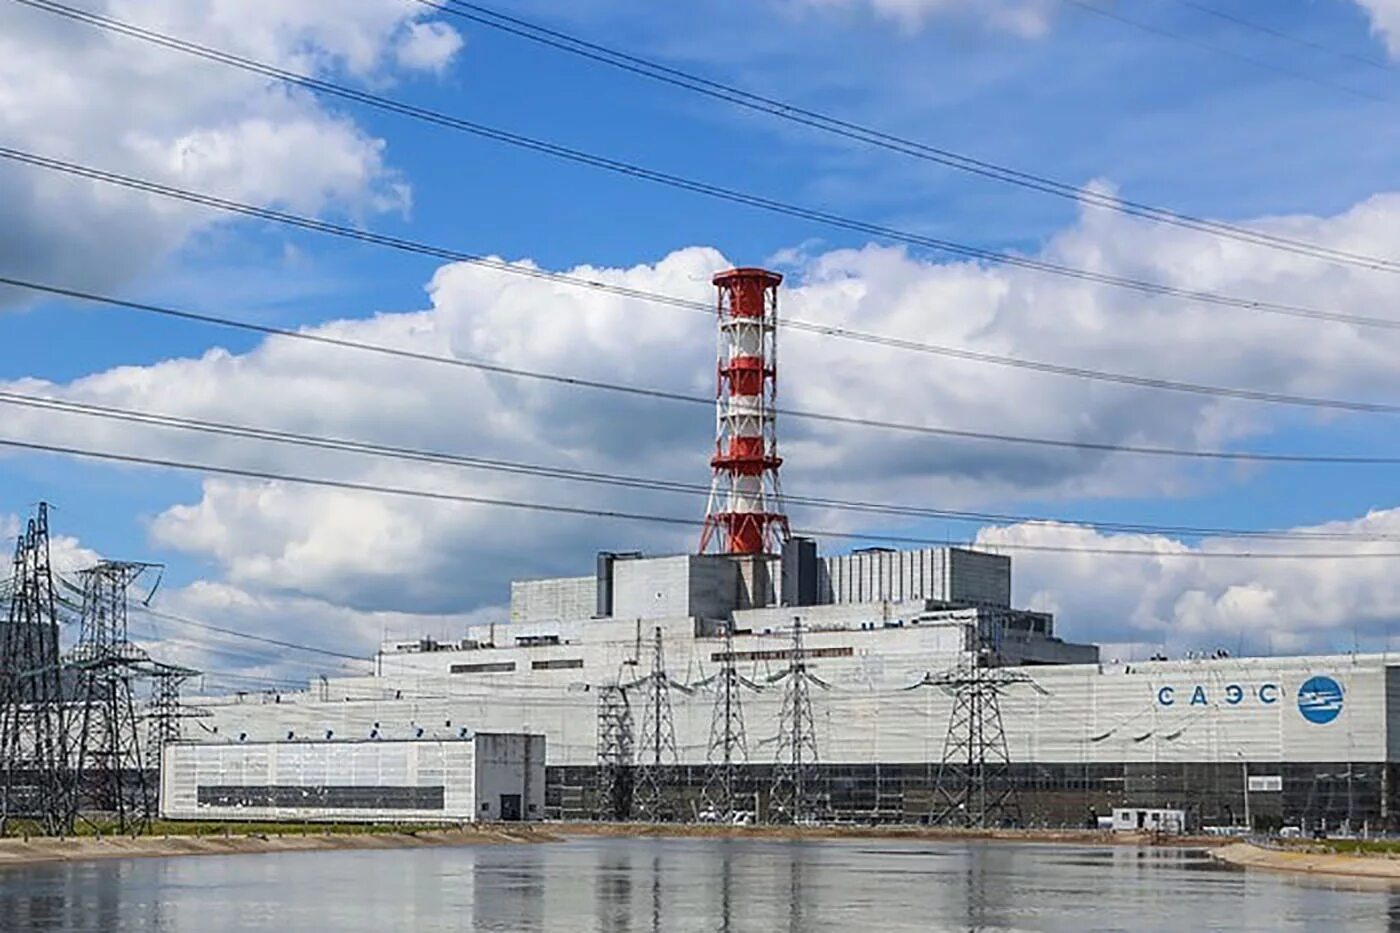 САЭС Смоленская атомная станция. Атомная станция Десногорск. Смоленская АЭС 4 энергоблок. Смоленская АЭС Десногорск. Го аэс